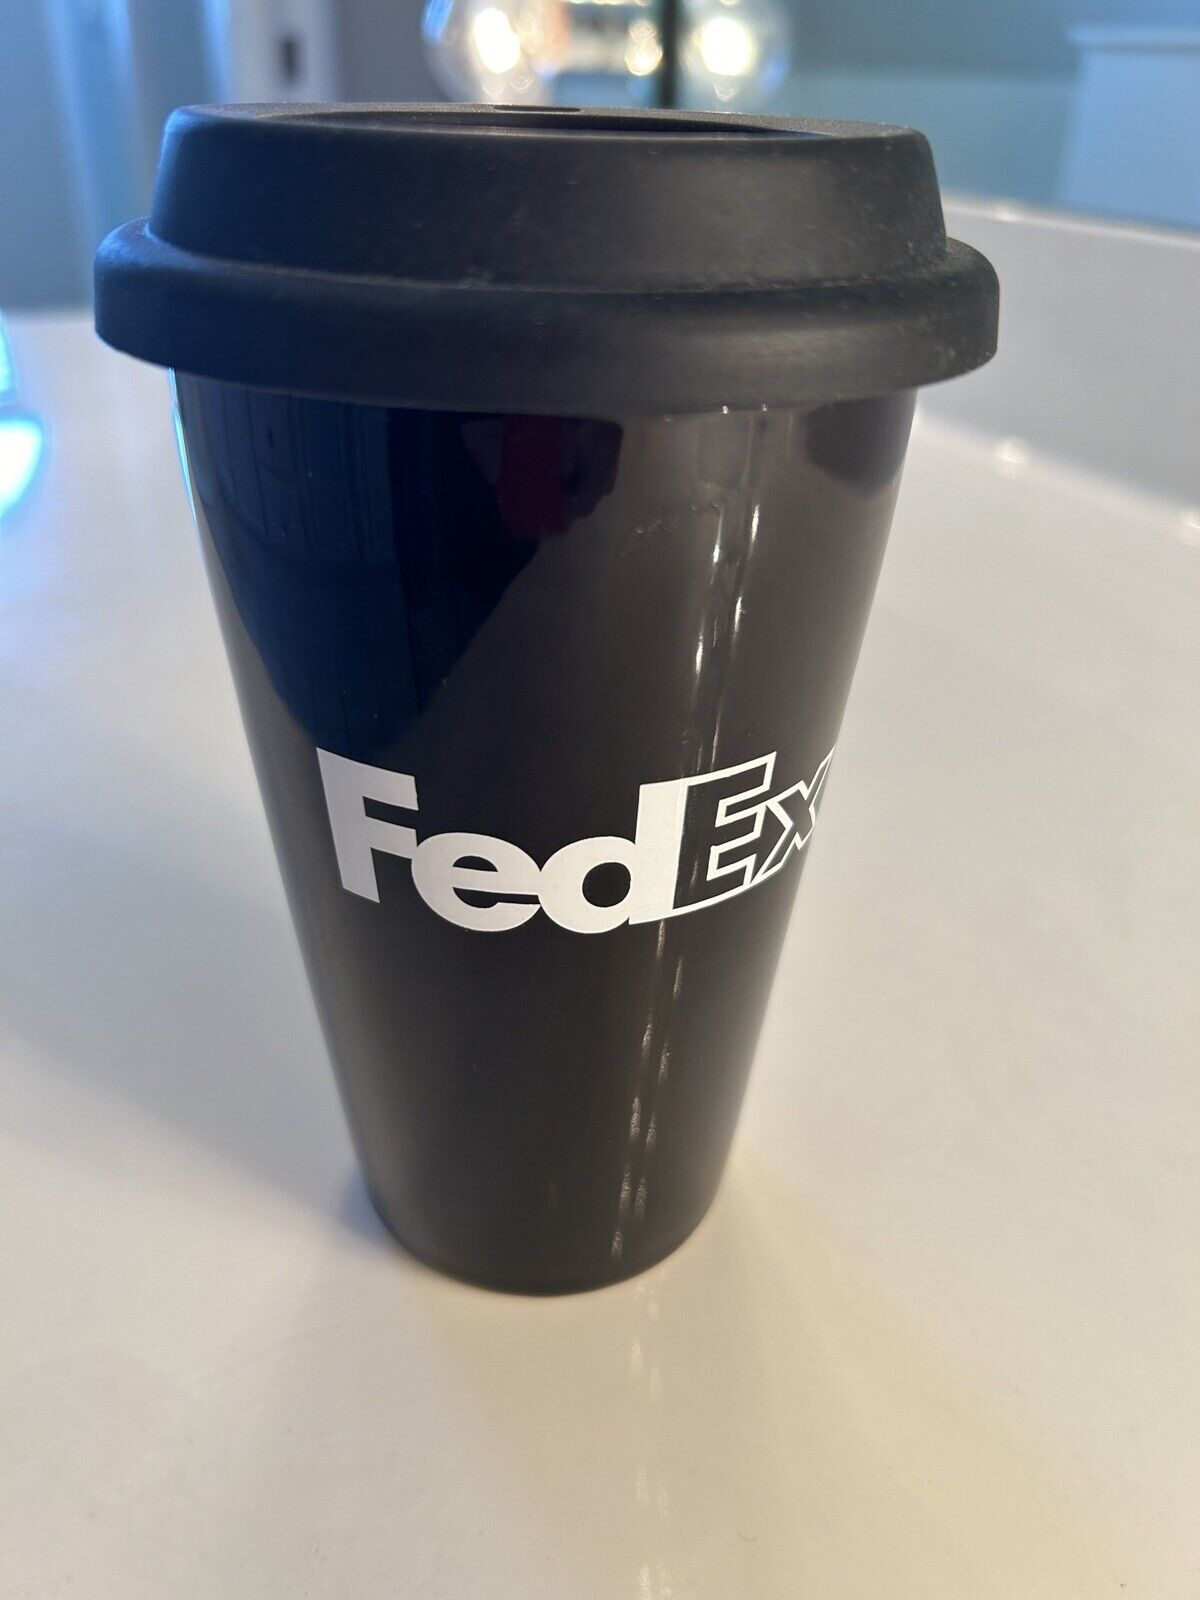 FedEx Freight Express Ground Ceramic Travel Coffee Tea Drink Mug Cup NEW